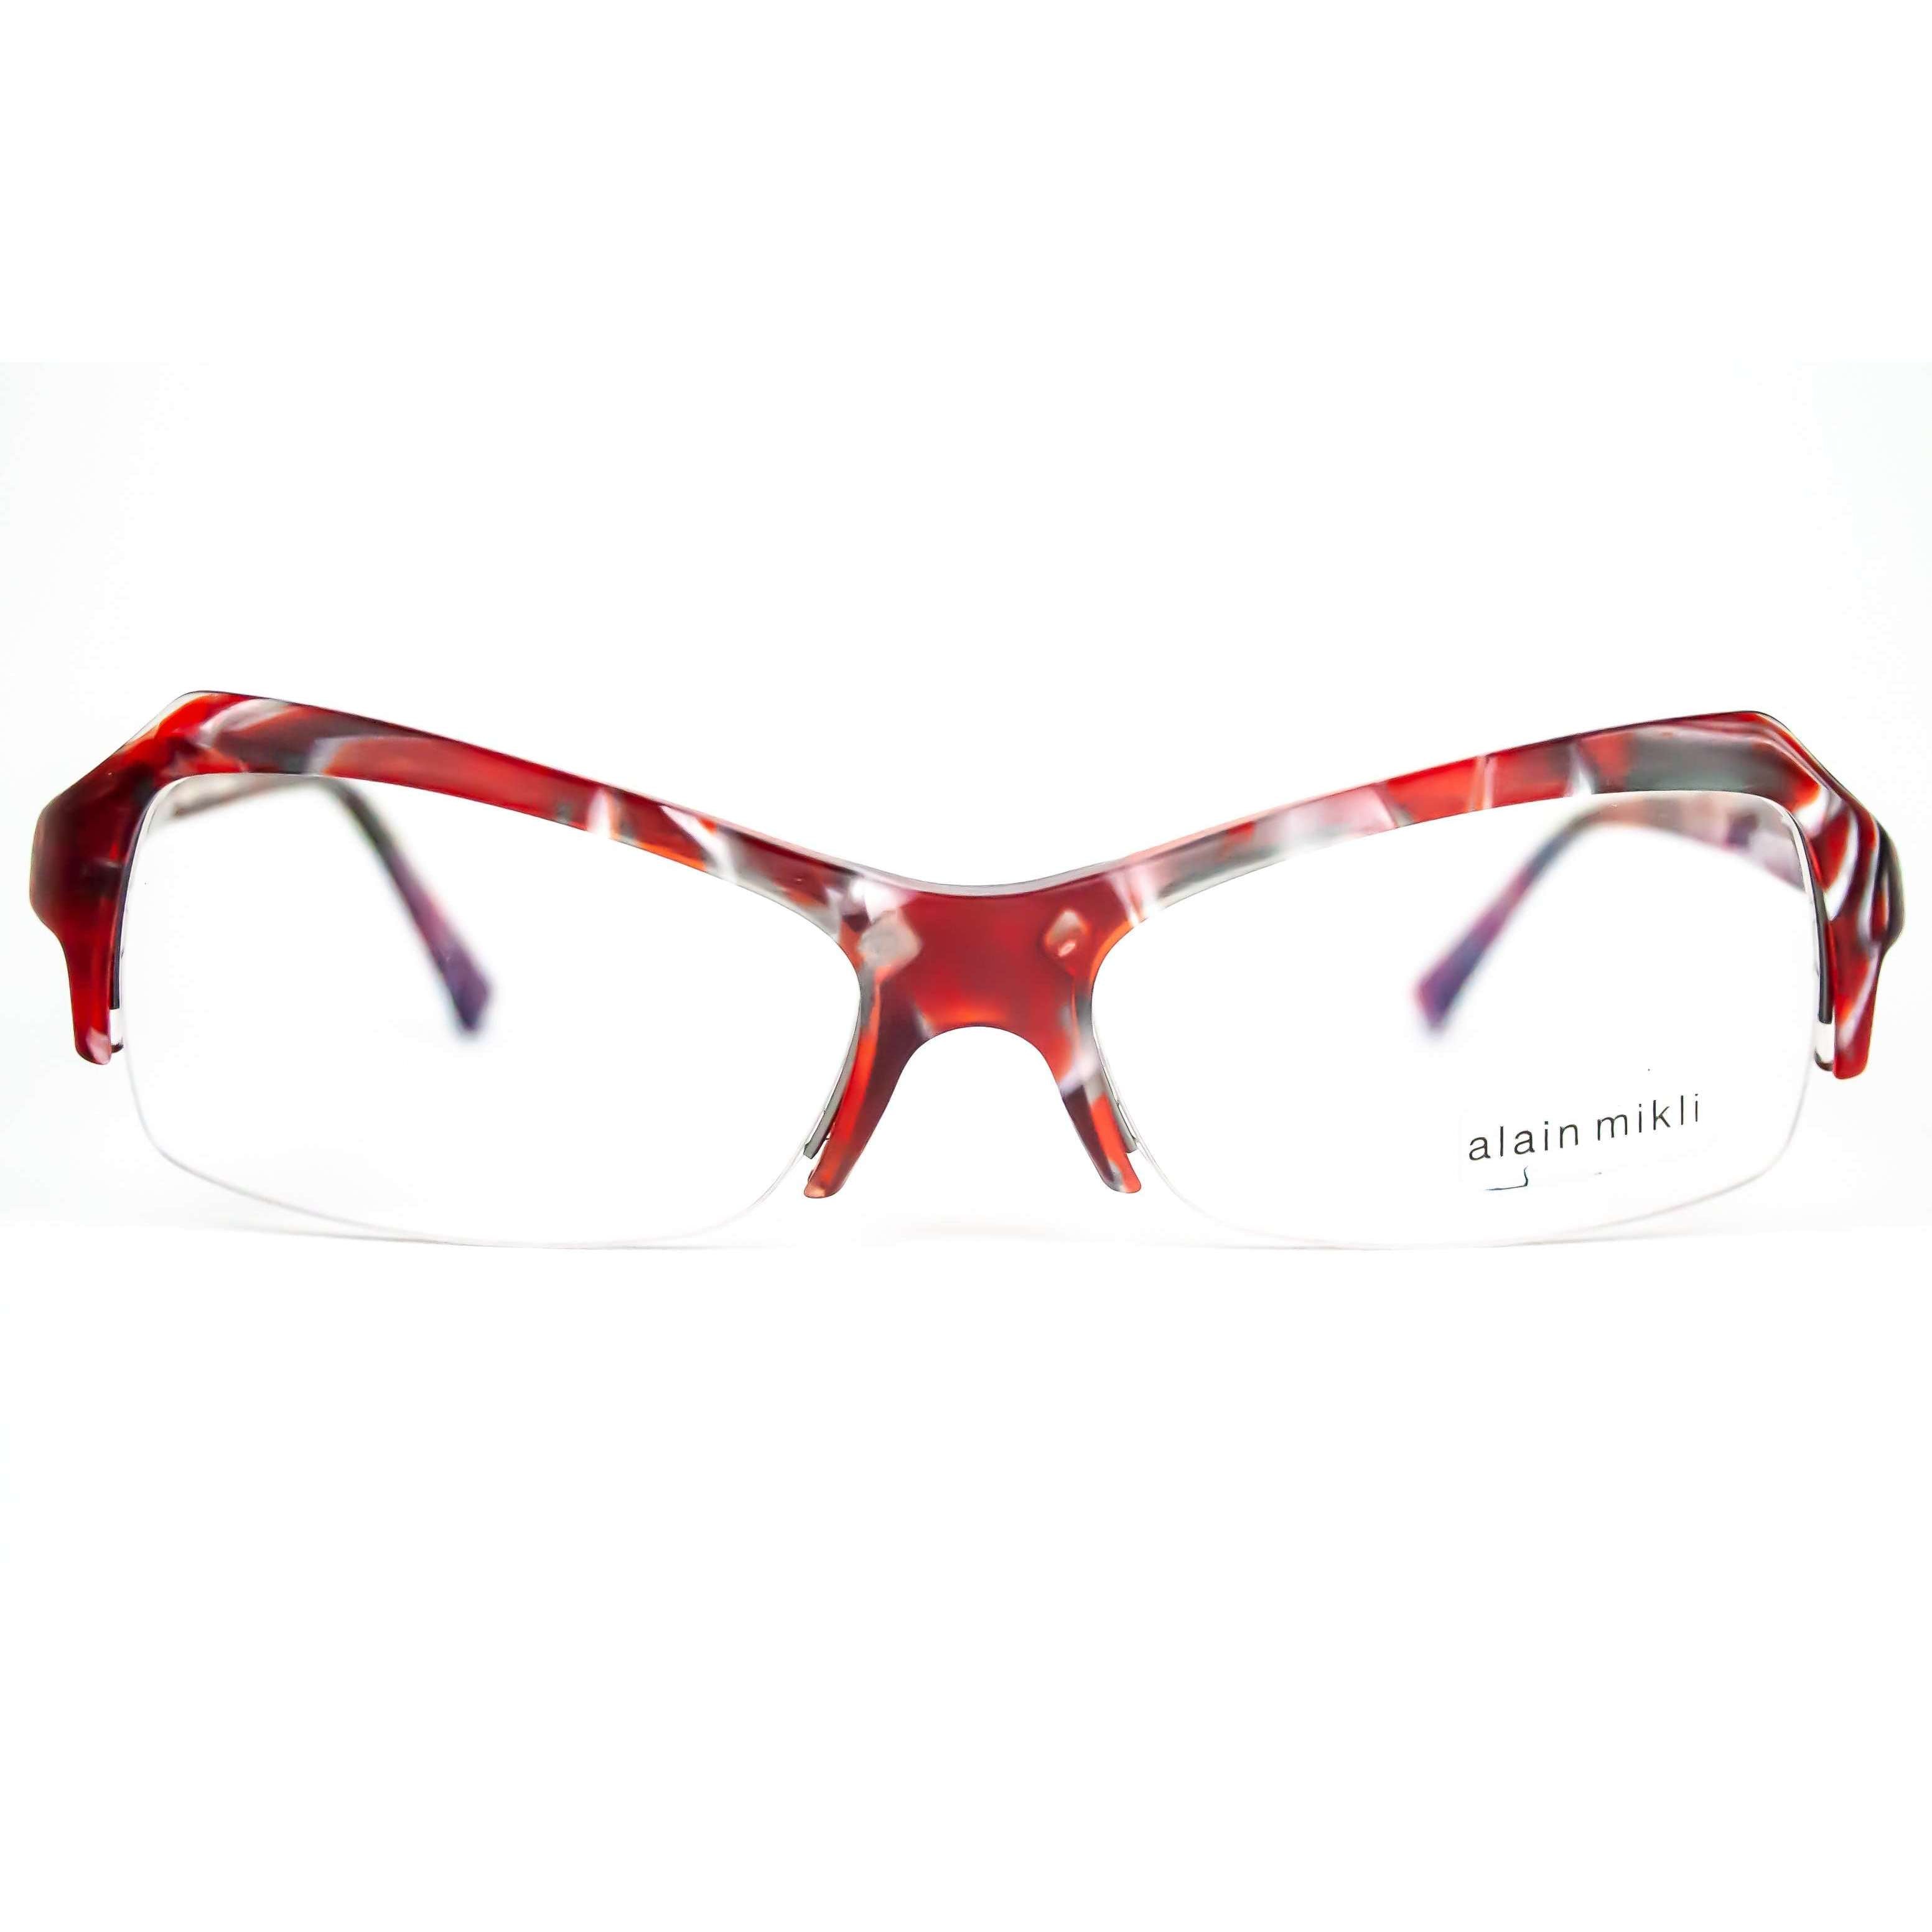 Alain Mikli Model AL1024 Red And Black Glasses